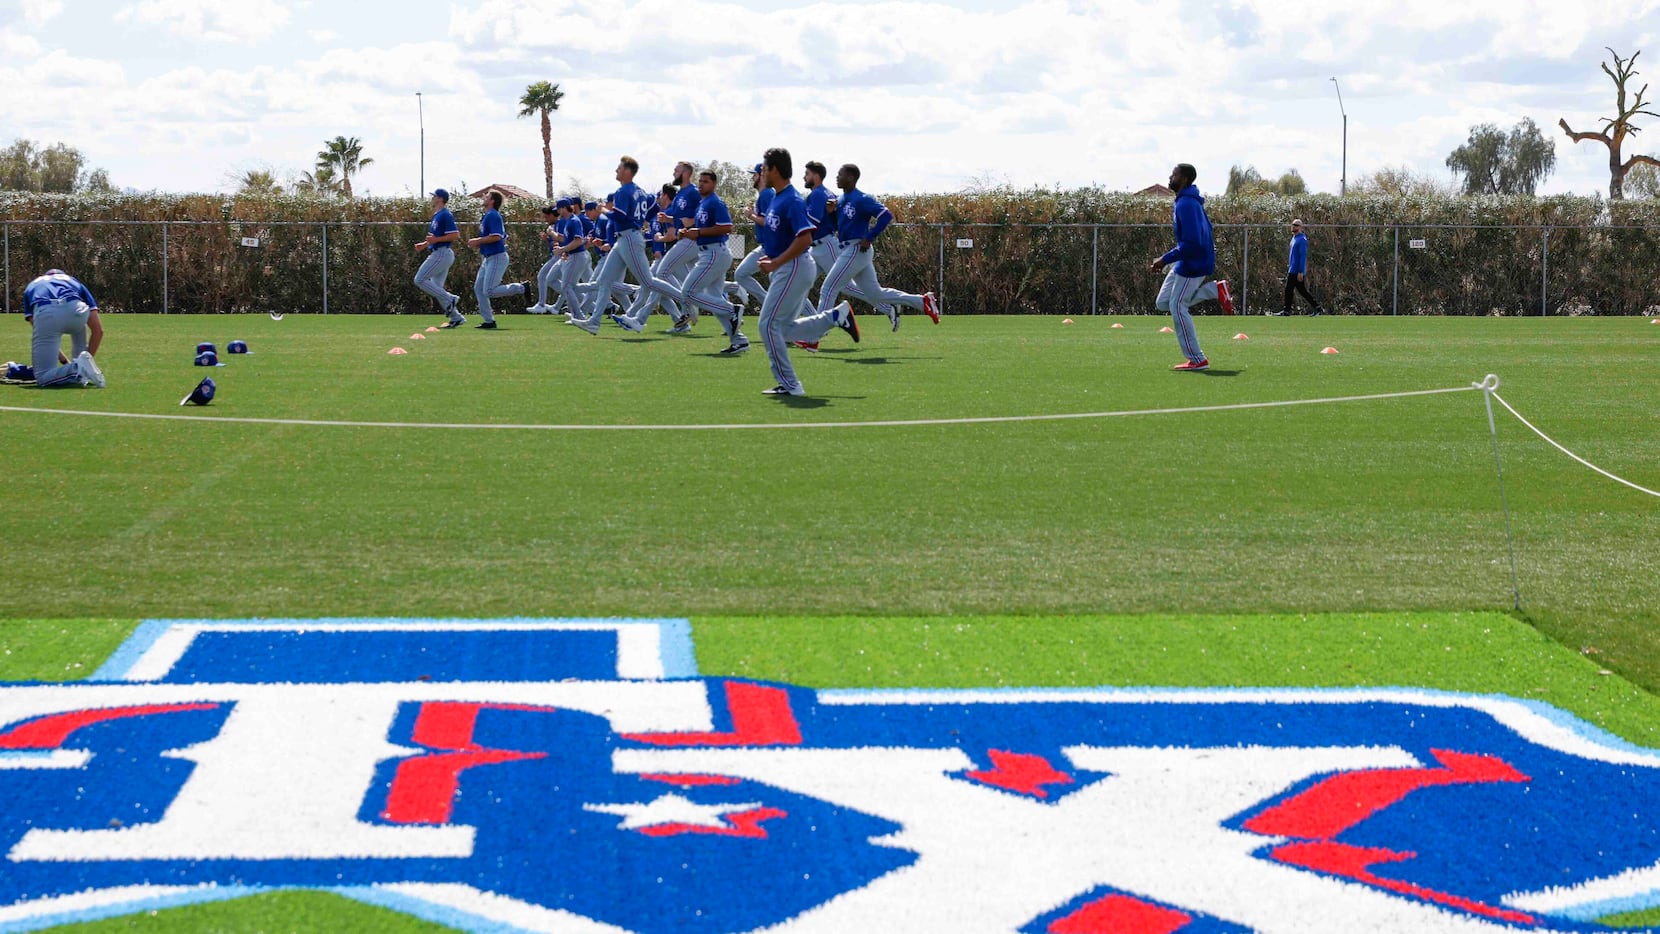 Texas Rangers announce 2024 spring training schedule in Arizona